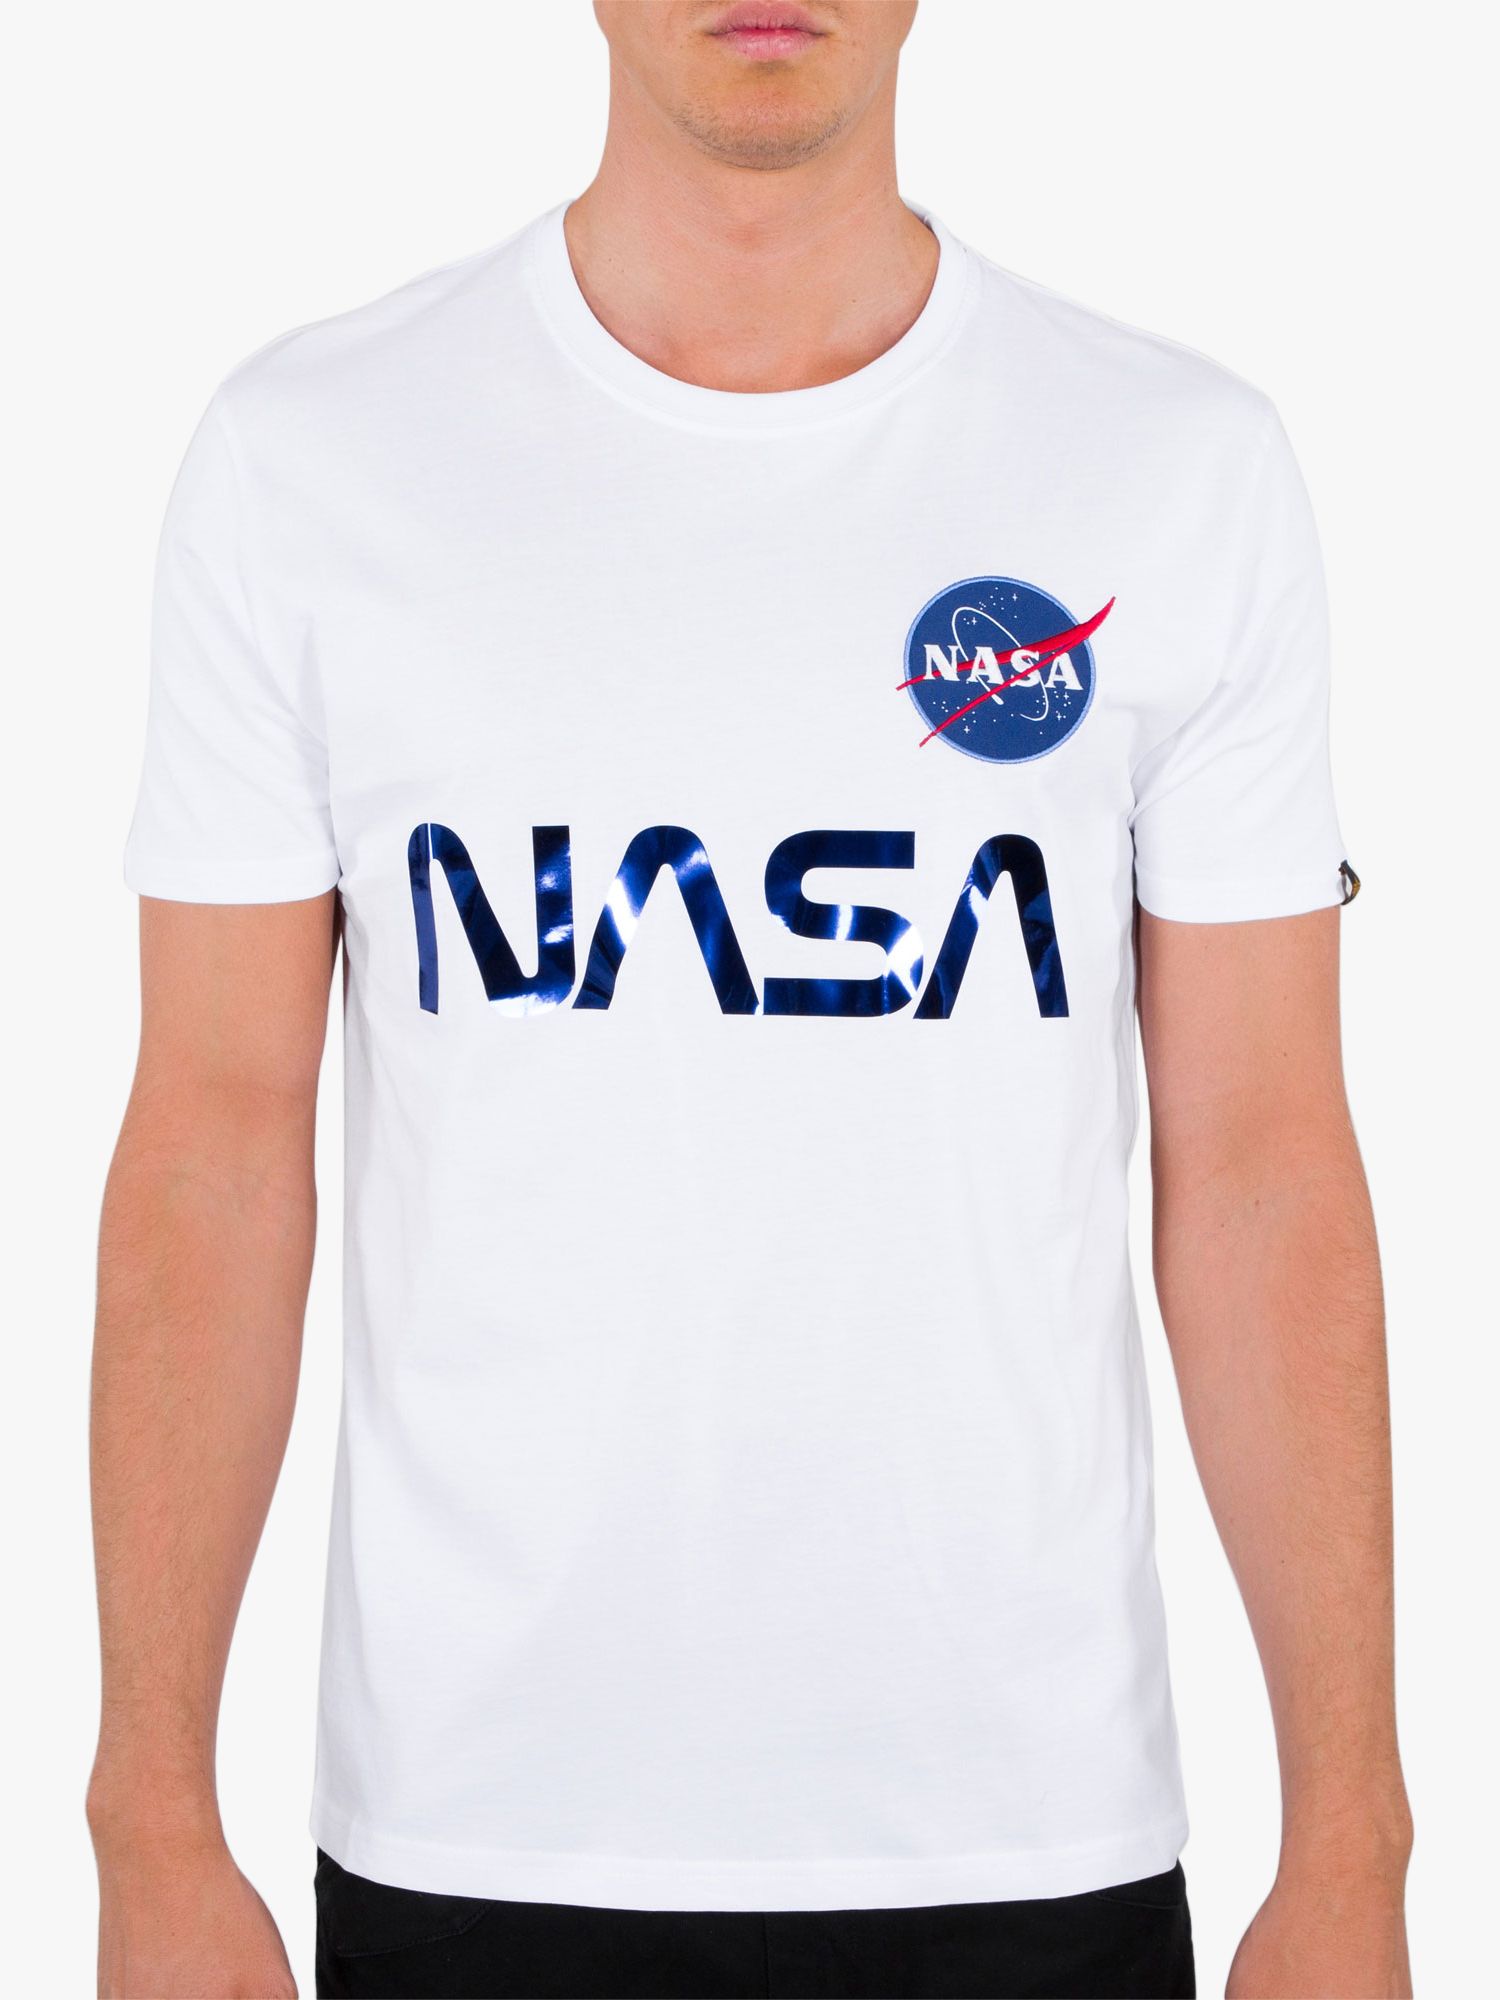 Alpha Industries X NASA Reflective Logo John Lewis White/Blue & Partners T-Shirt, Crew 90 Neck at